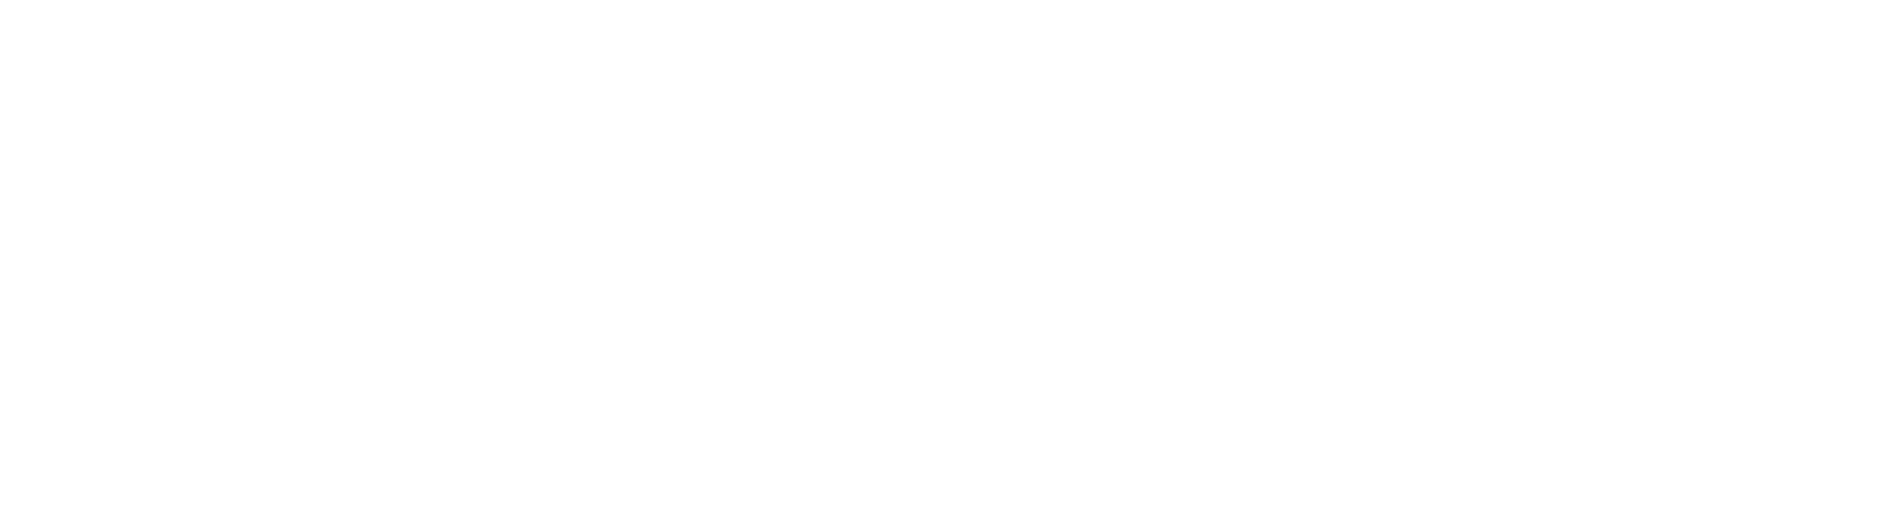 Beck`s Hybrids